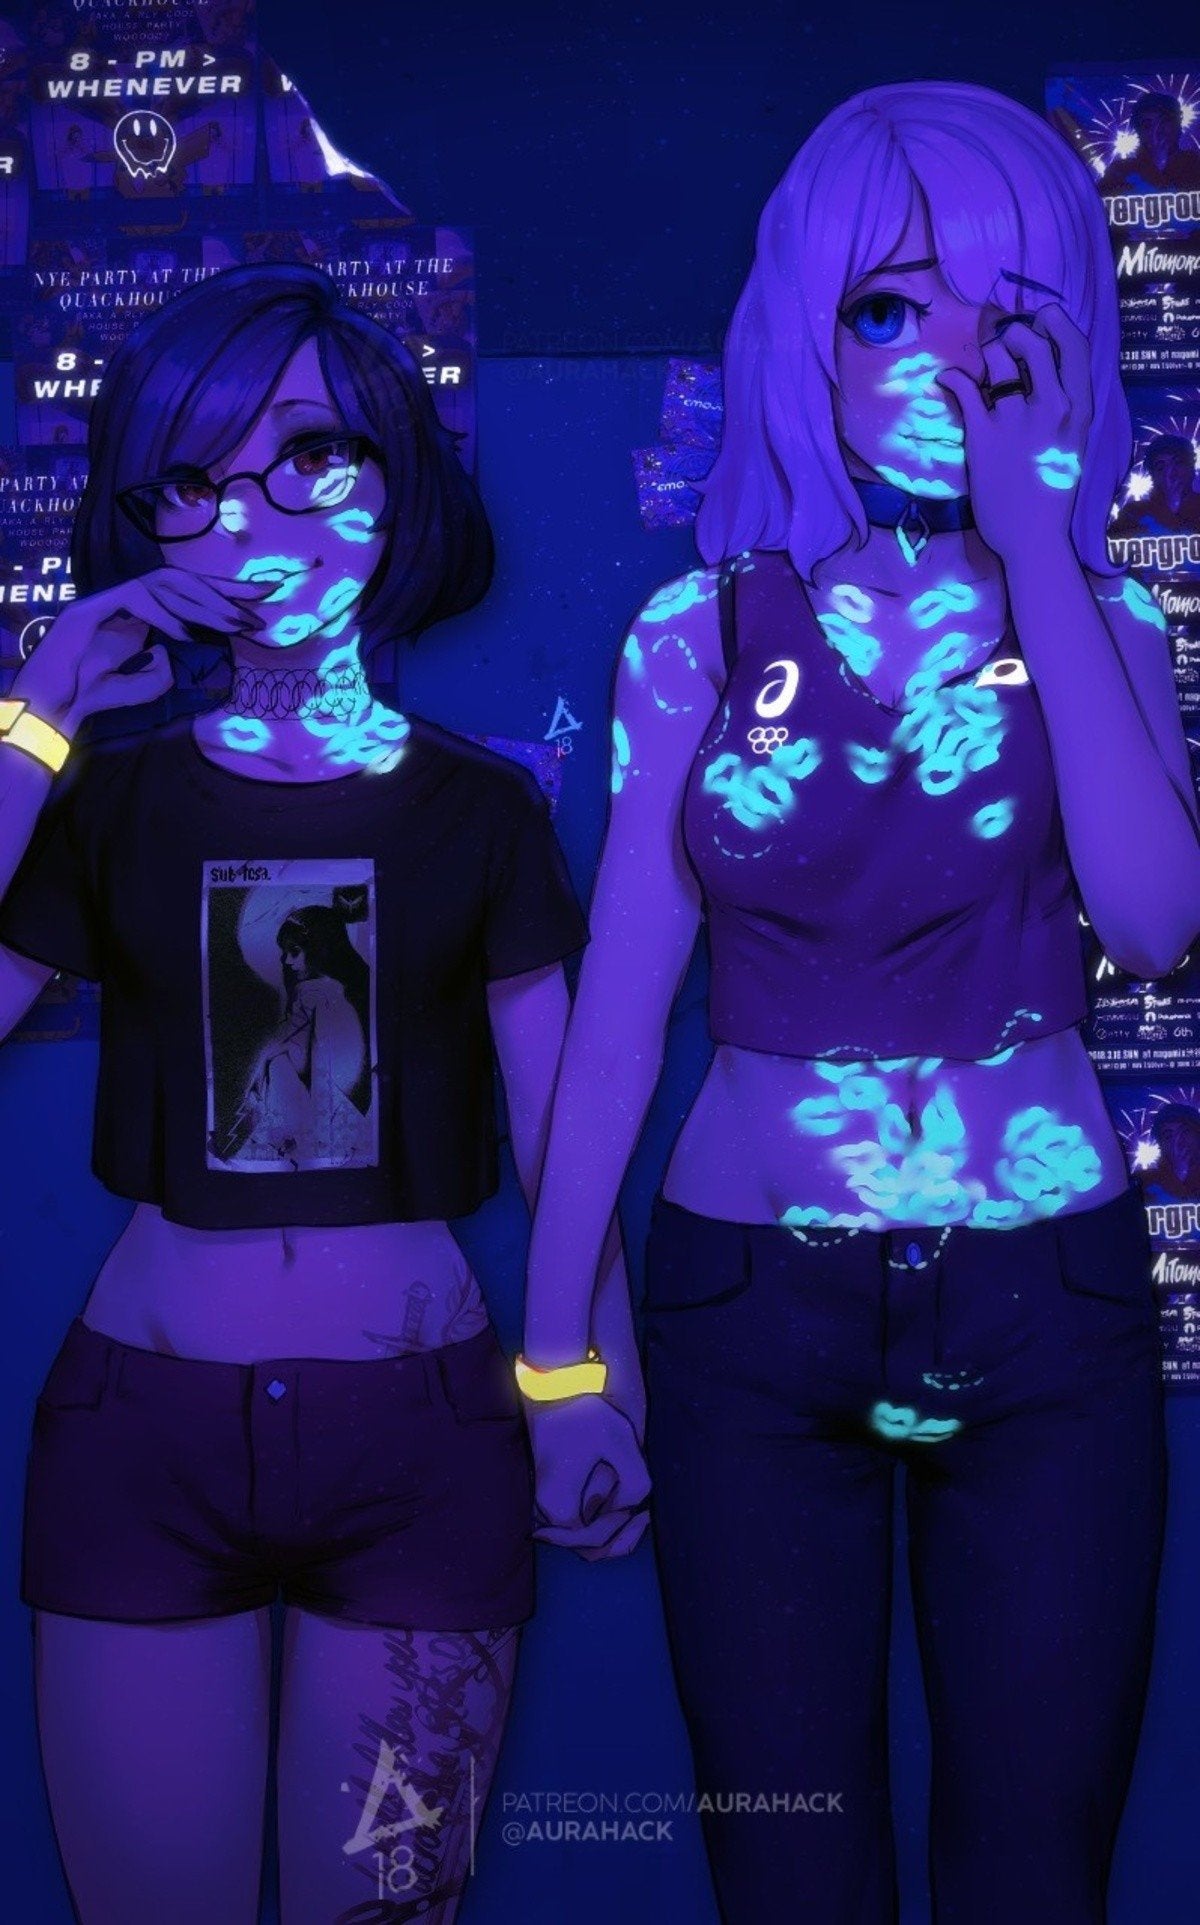 General 1200x1925 lipstick aurahack holding hands lesbians Ultraviolet digital art portrait display low light watermarked